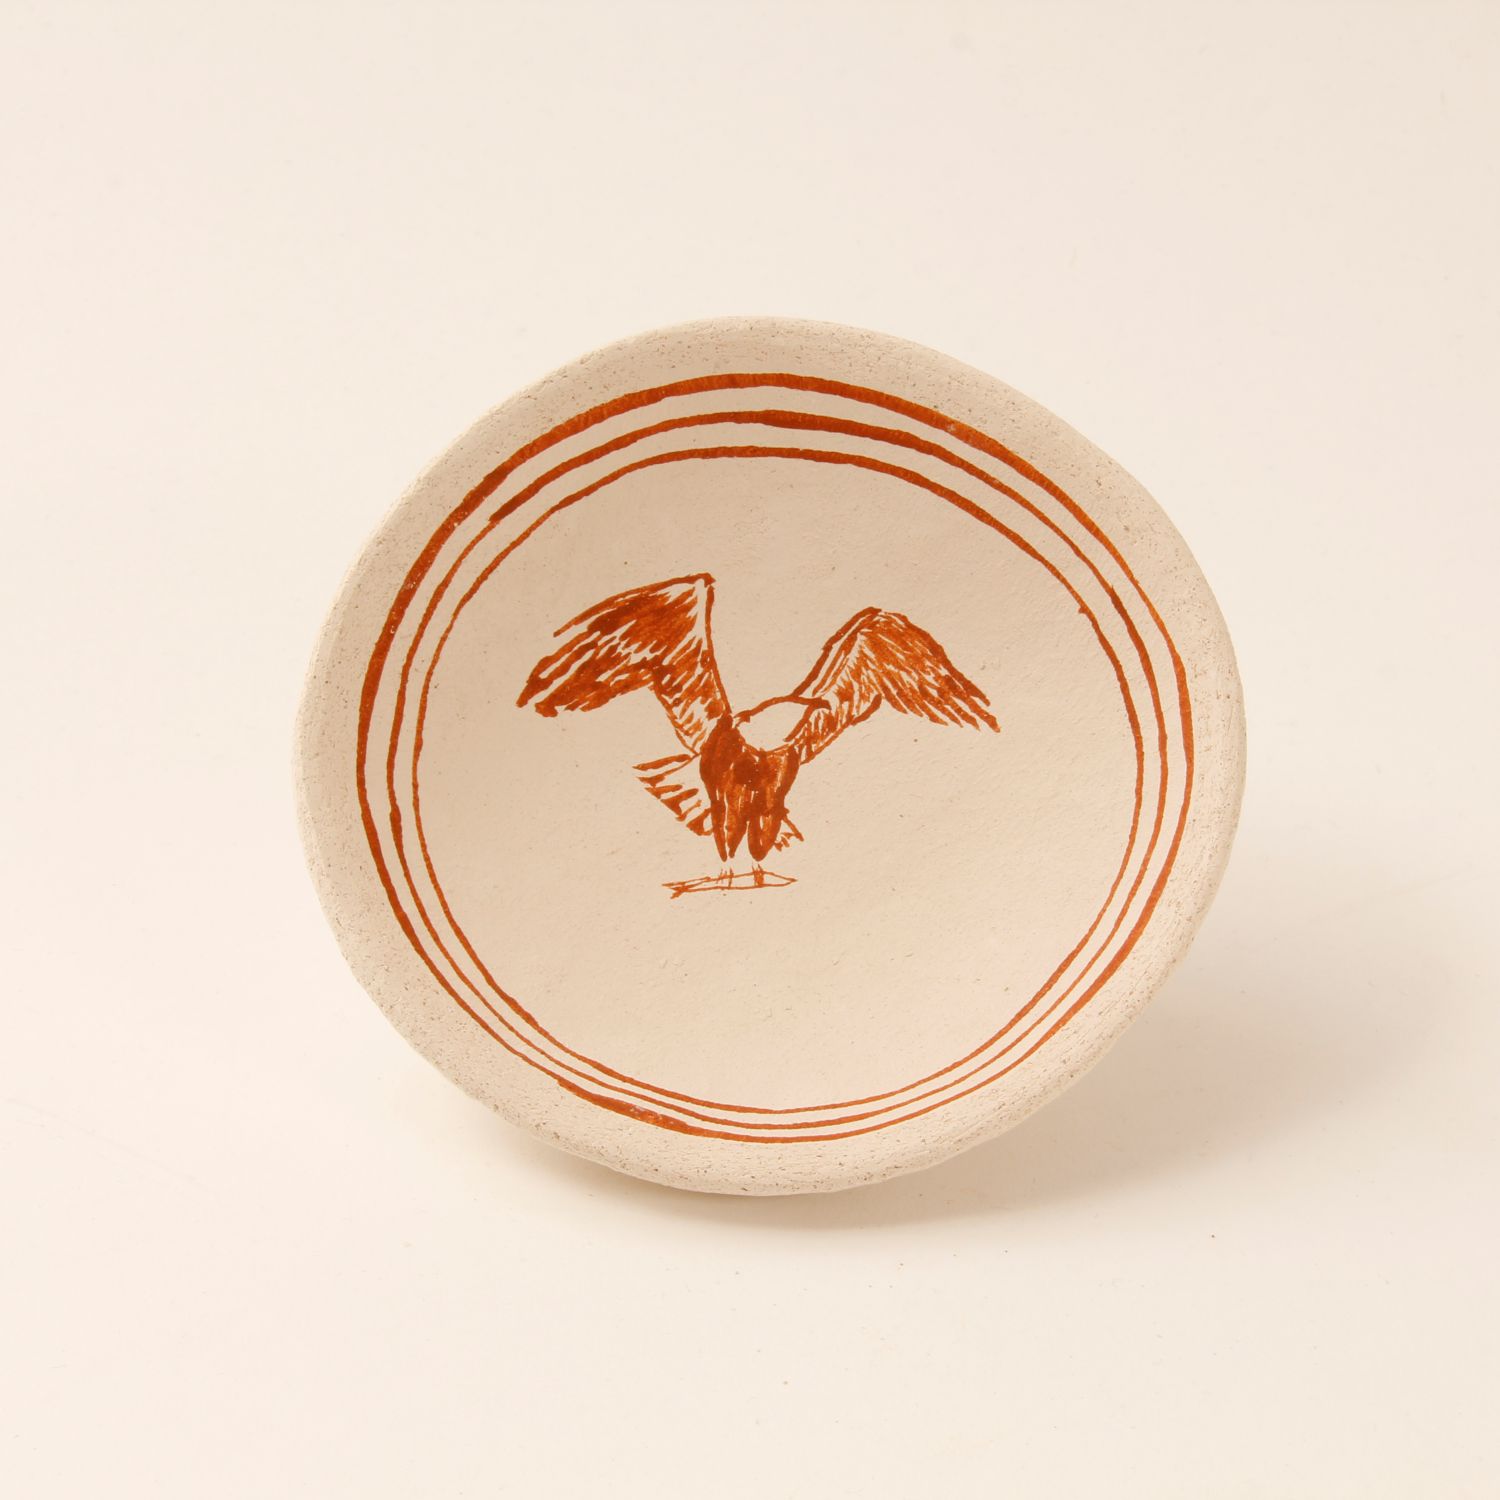 David Migwans: Eagle Bowl Product Image 1 of 1